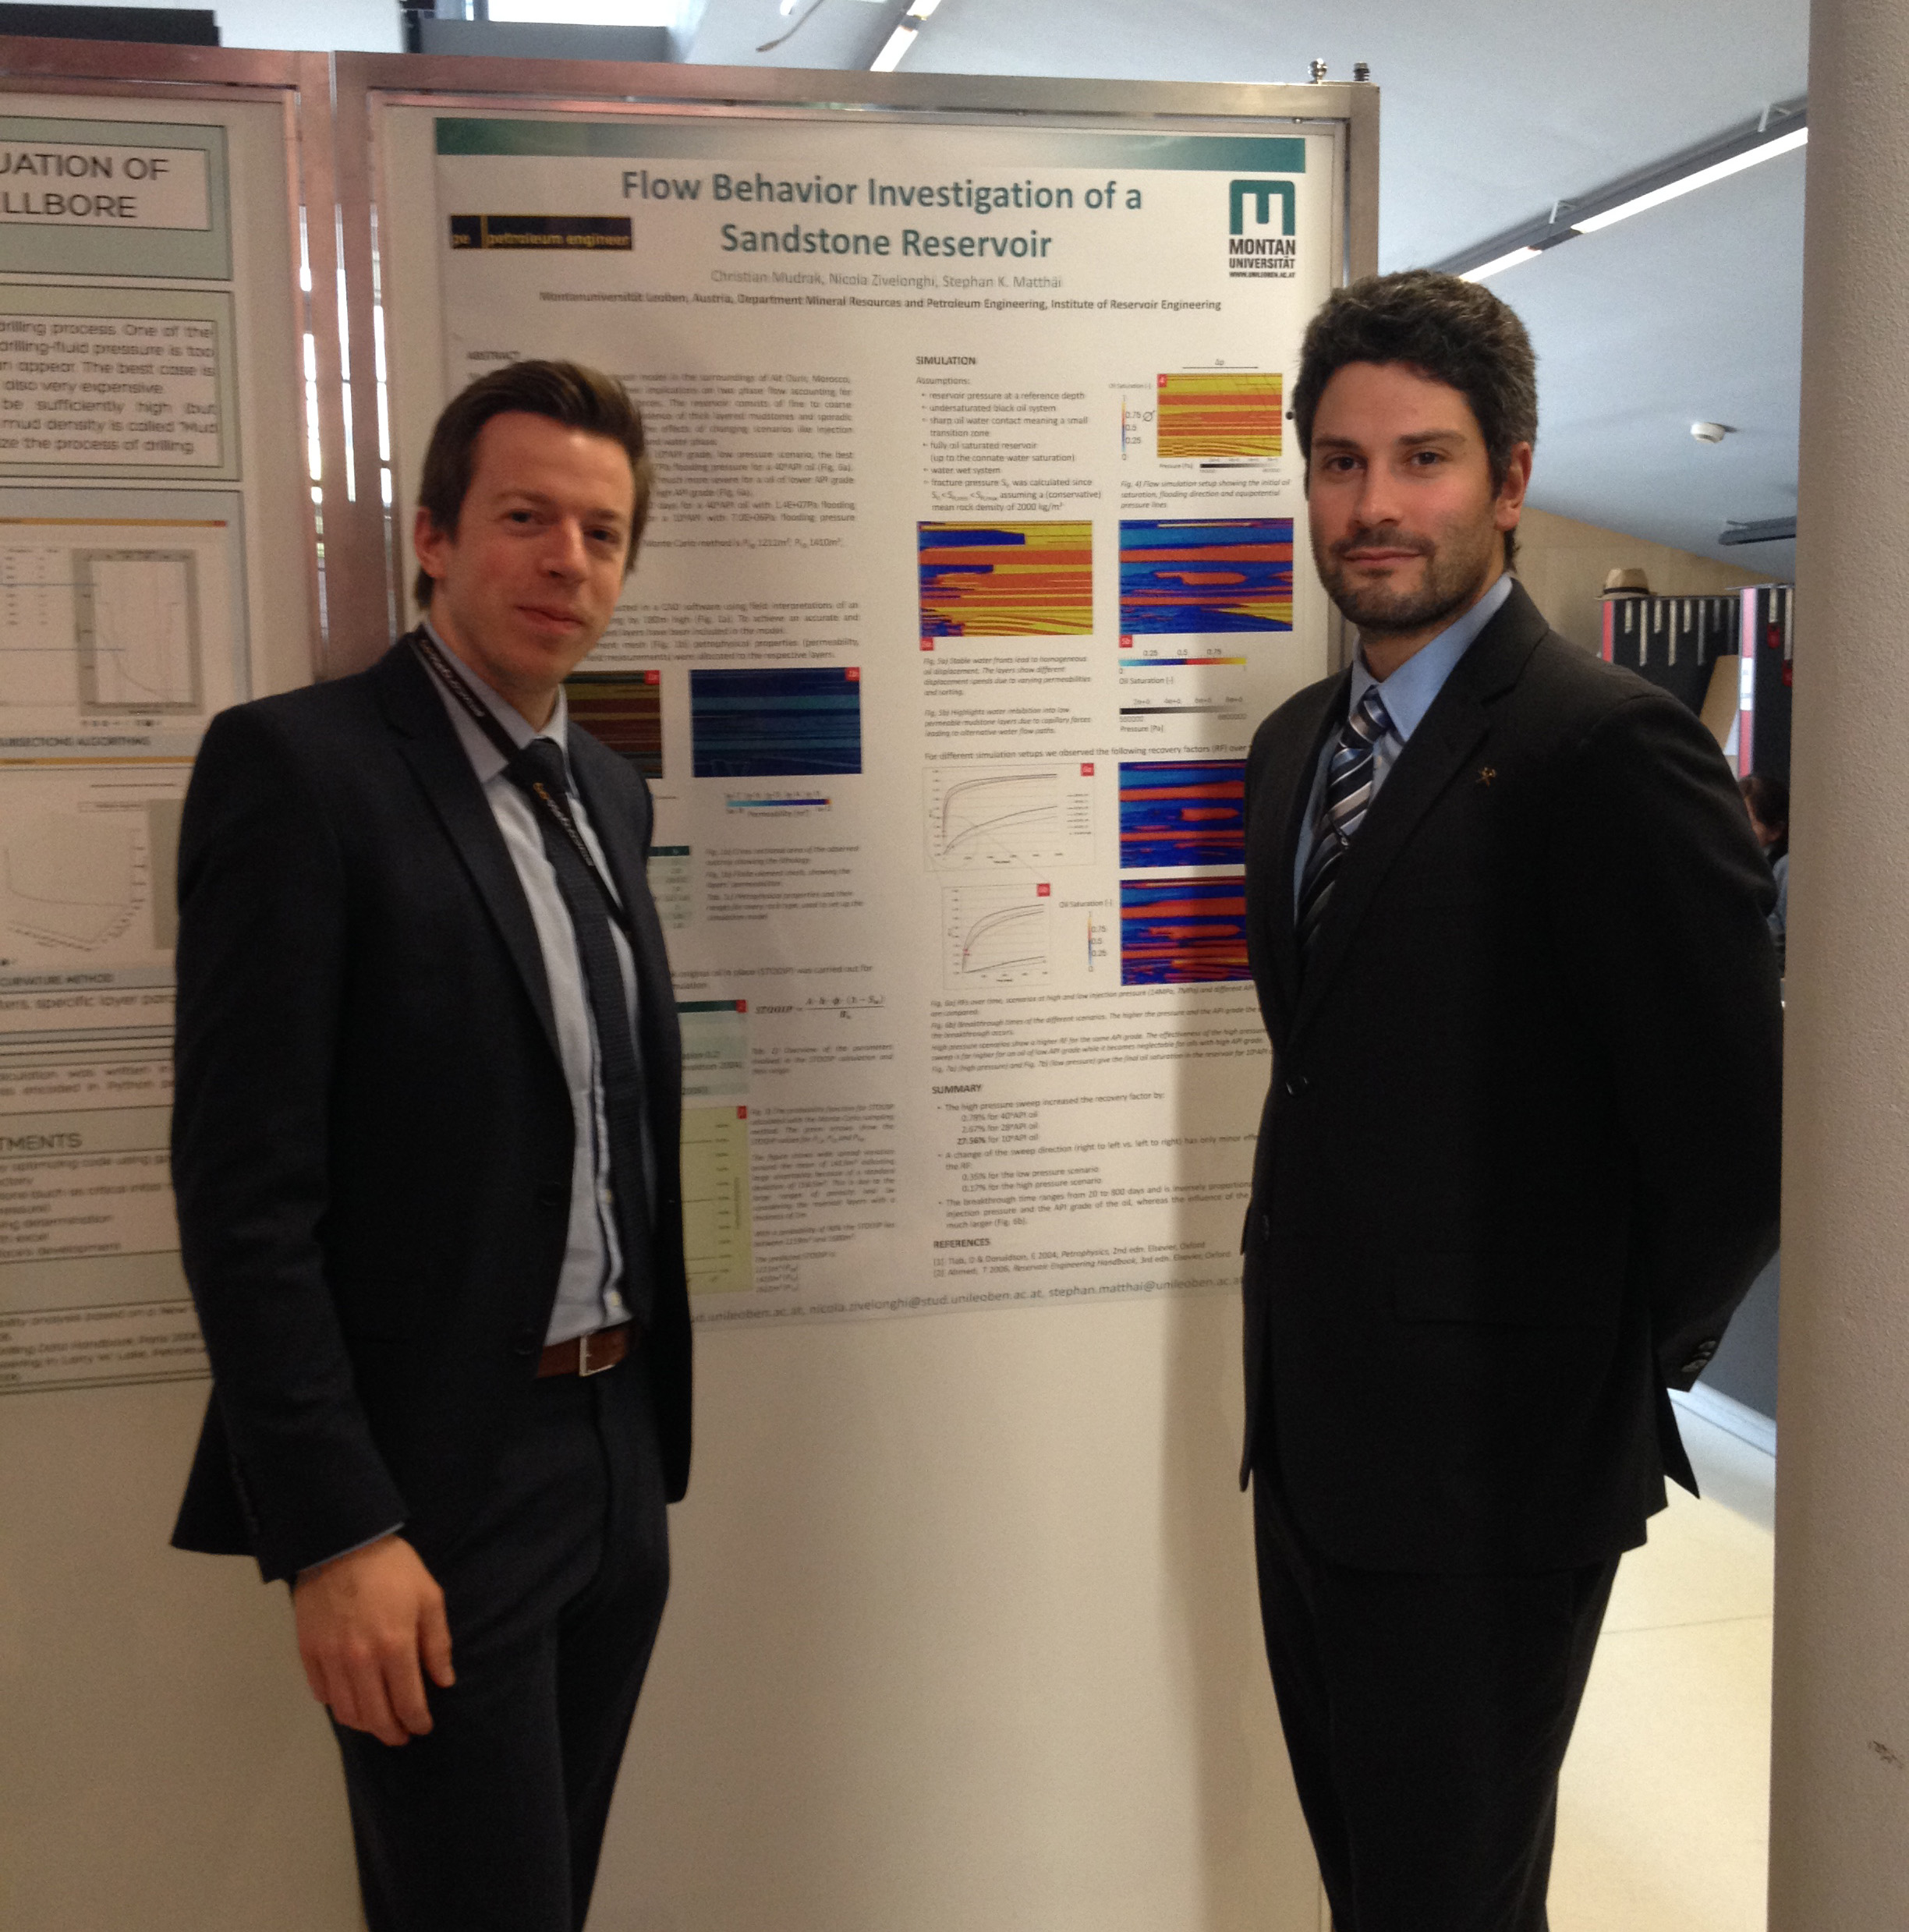 Christian Mudrak & Nicola Zivelonghi next to their poster presentation